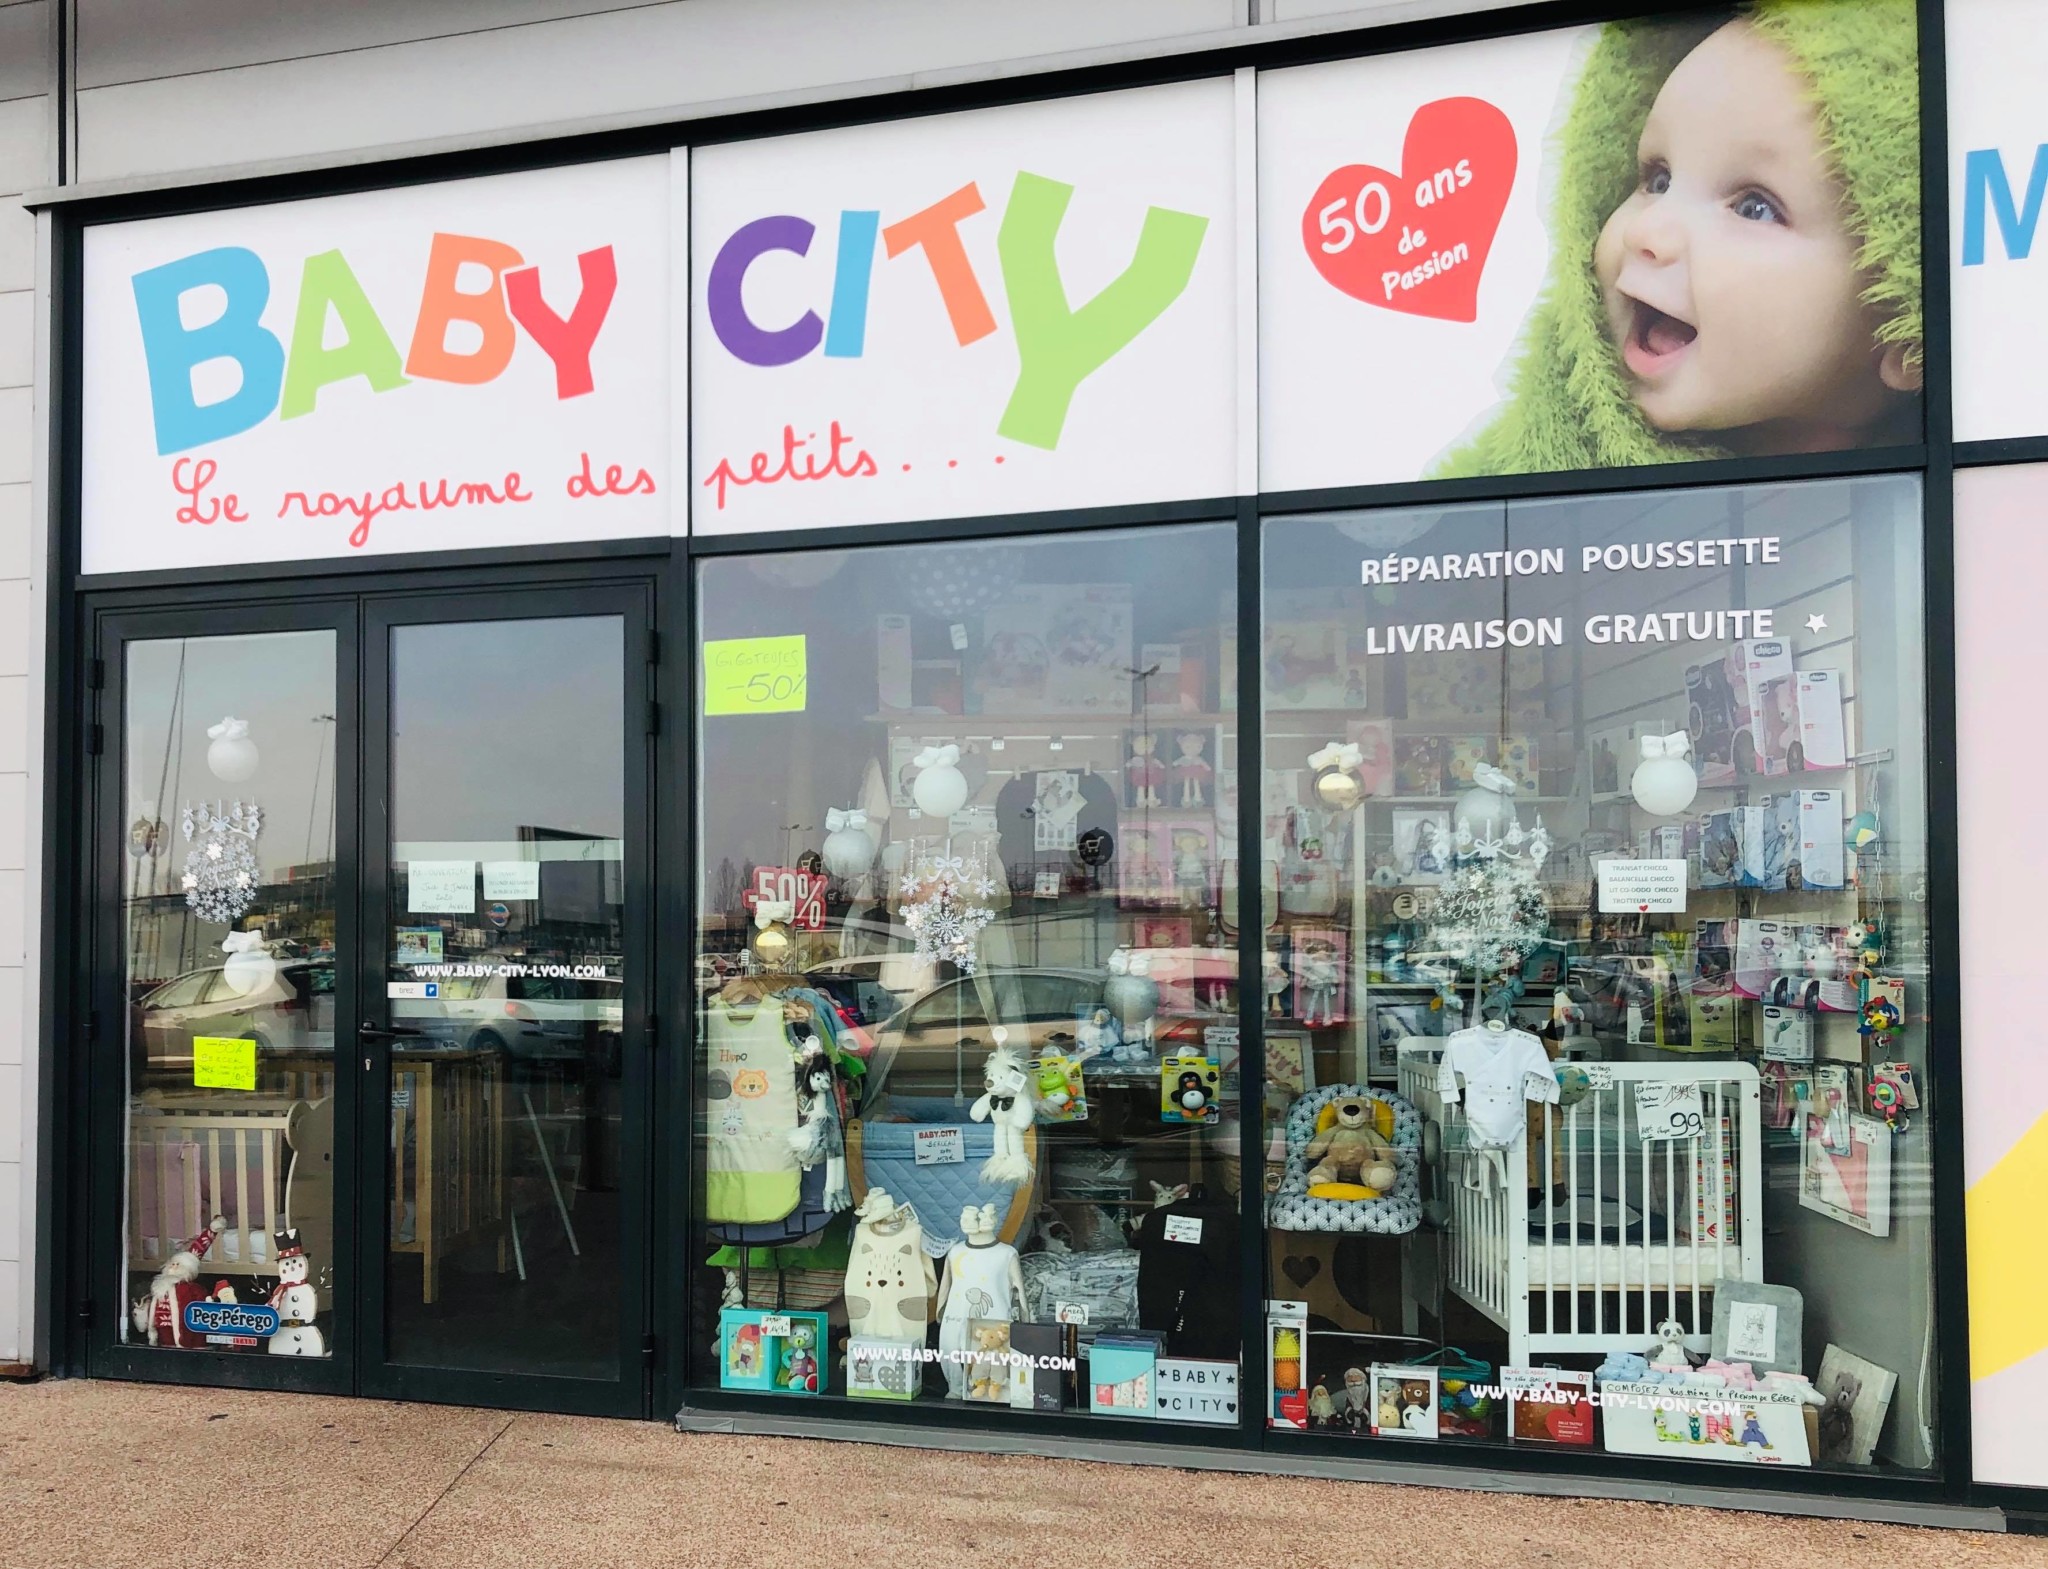 Baby City Centre Commercial Les Sept Chemins